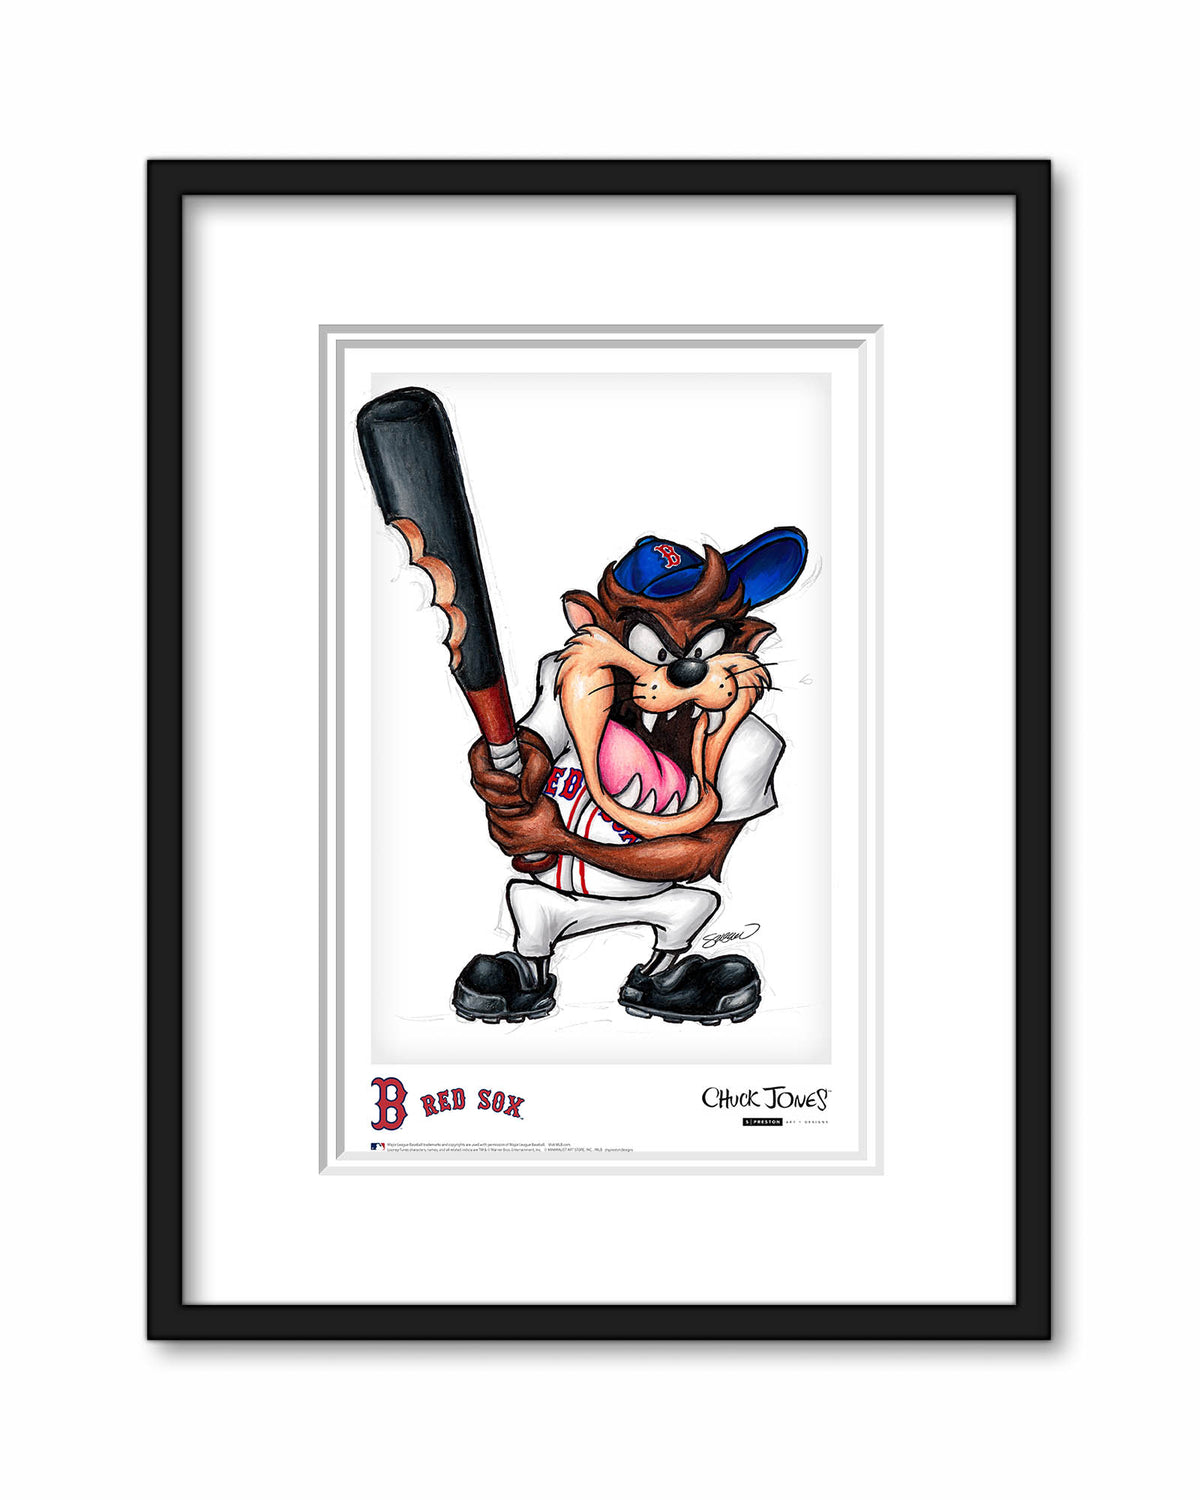 Taz on Deck x MLB Red Sox Poster Print